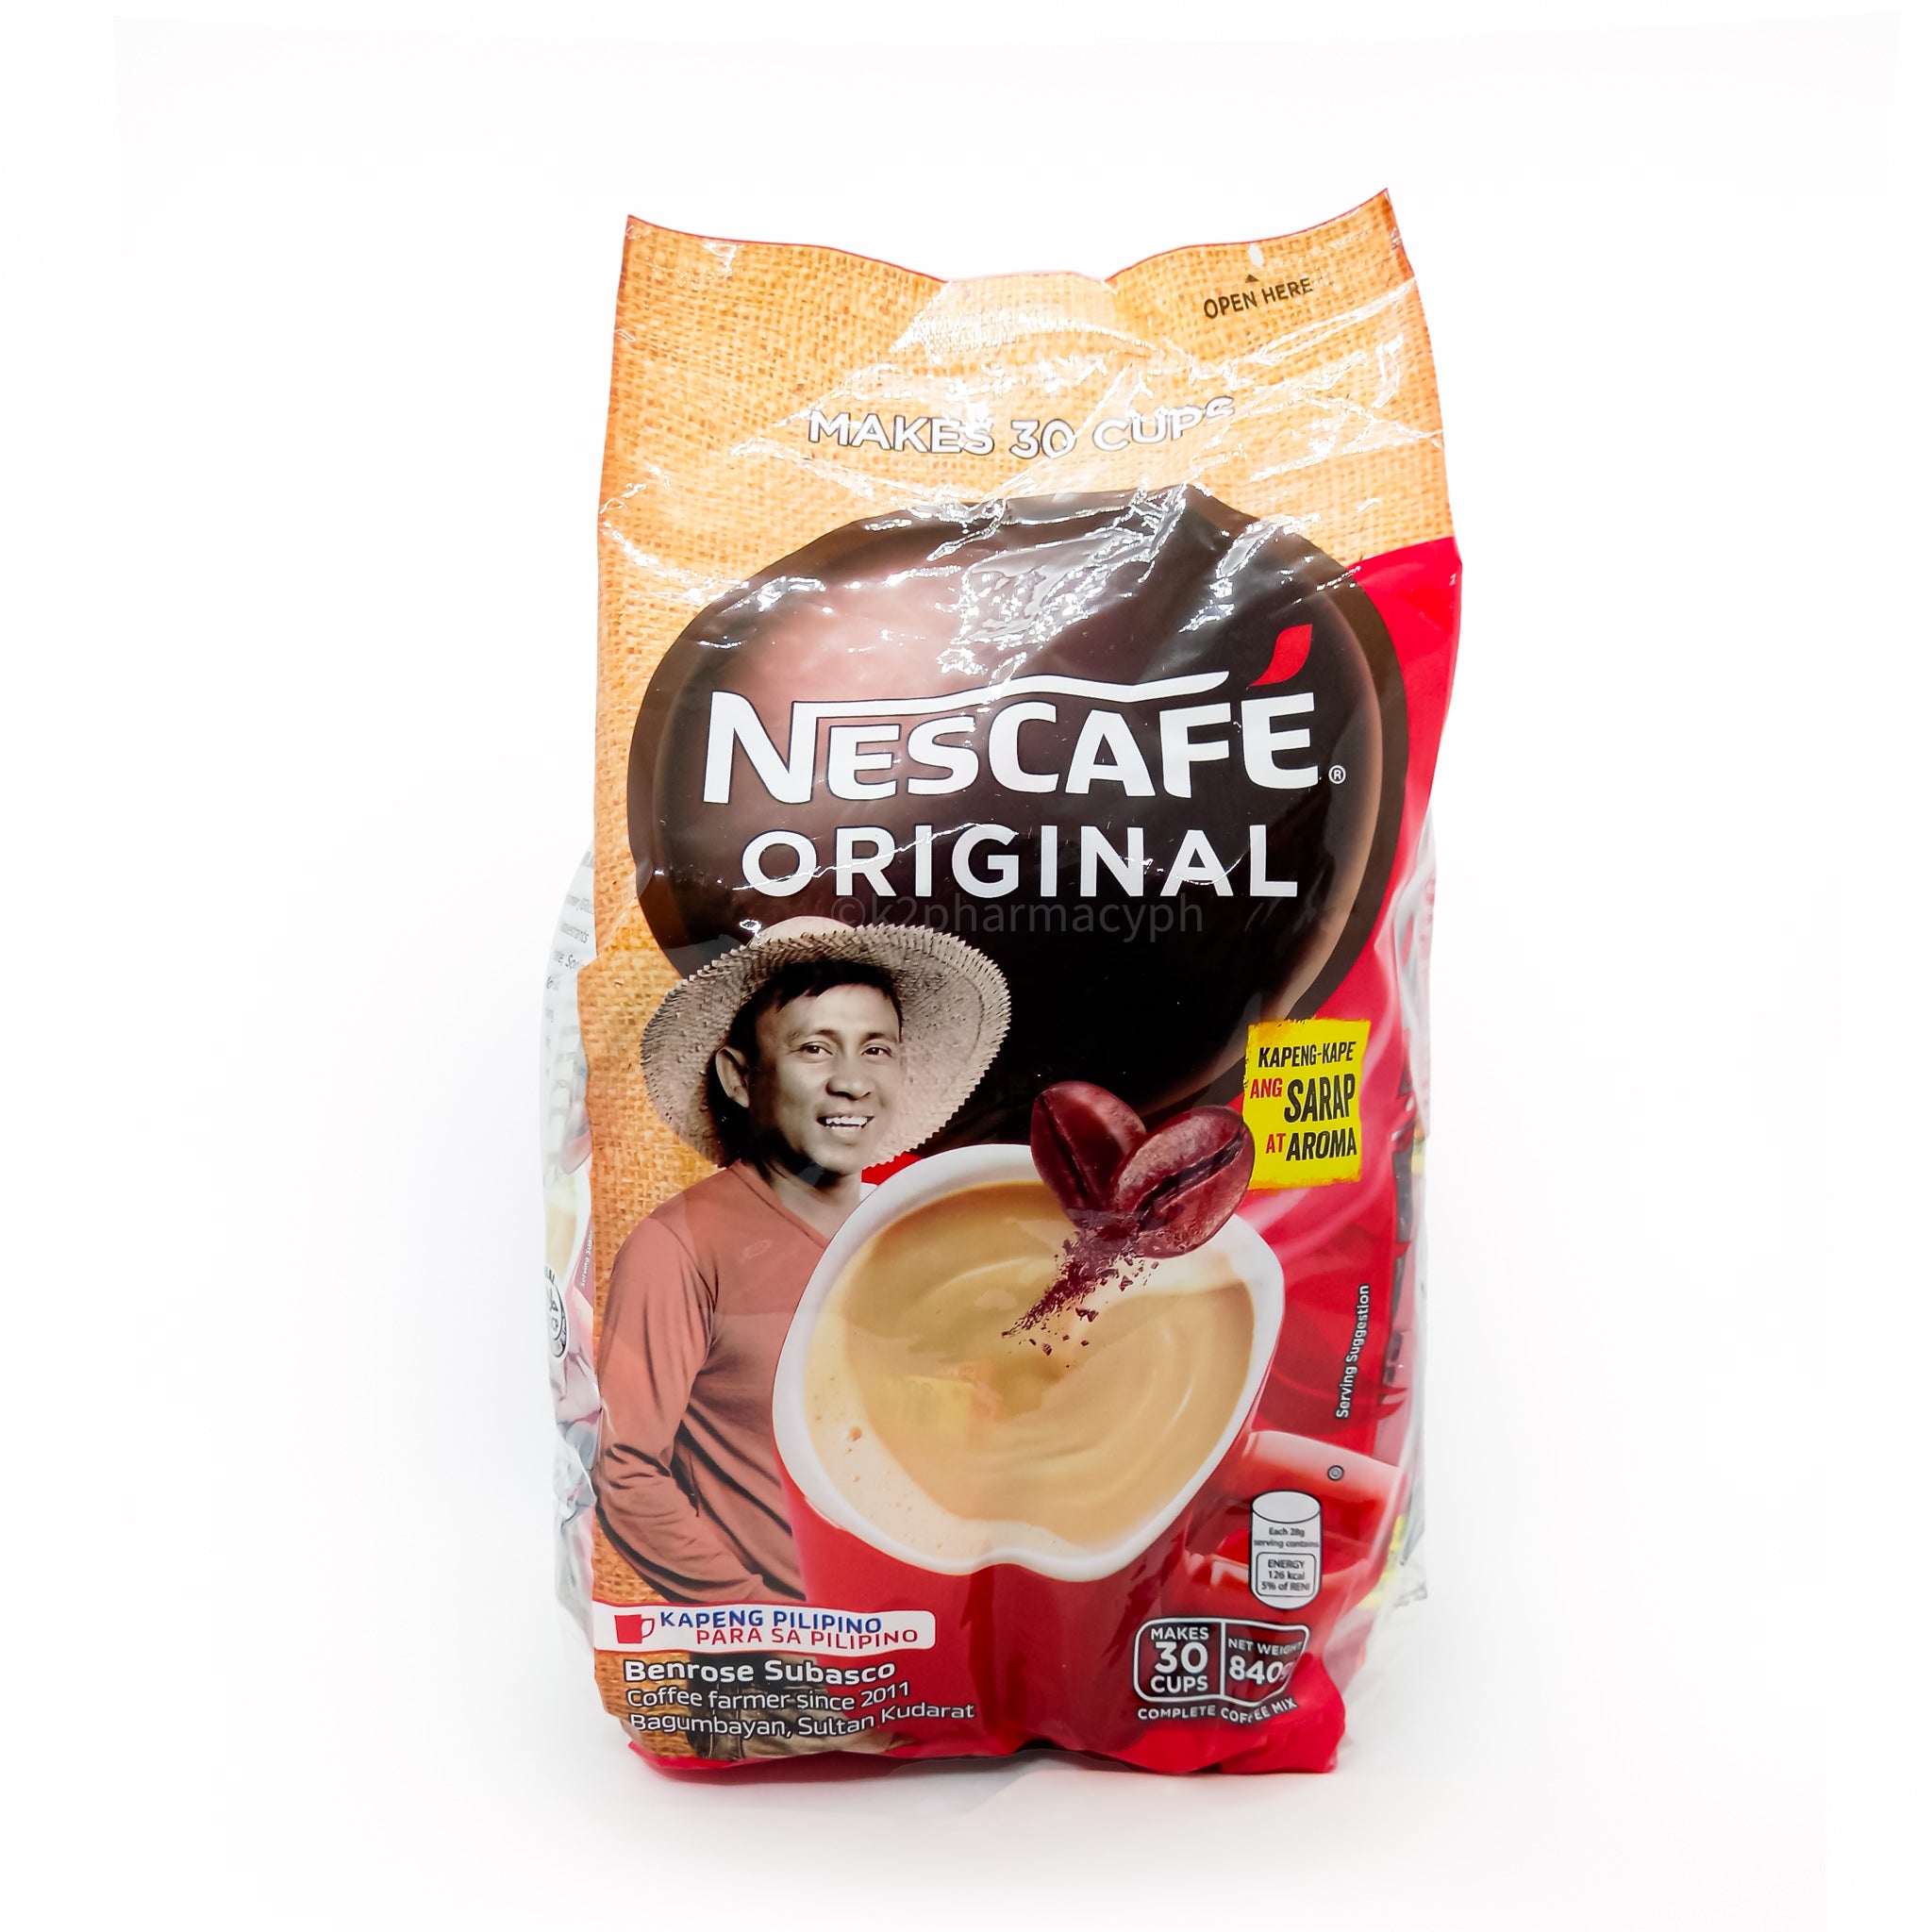 NESCAFE 3 in 1 Aromatic & Balanced Original Instant Coffee 30 sticks (1  pack)